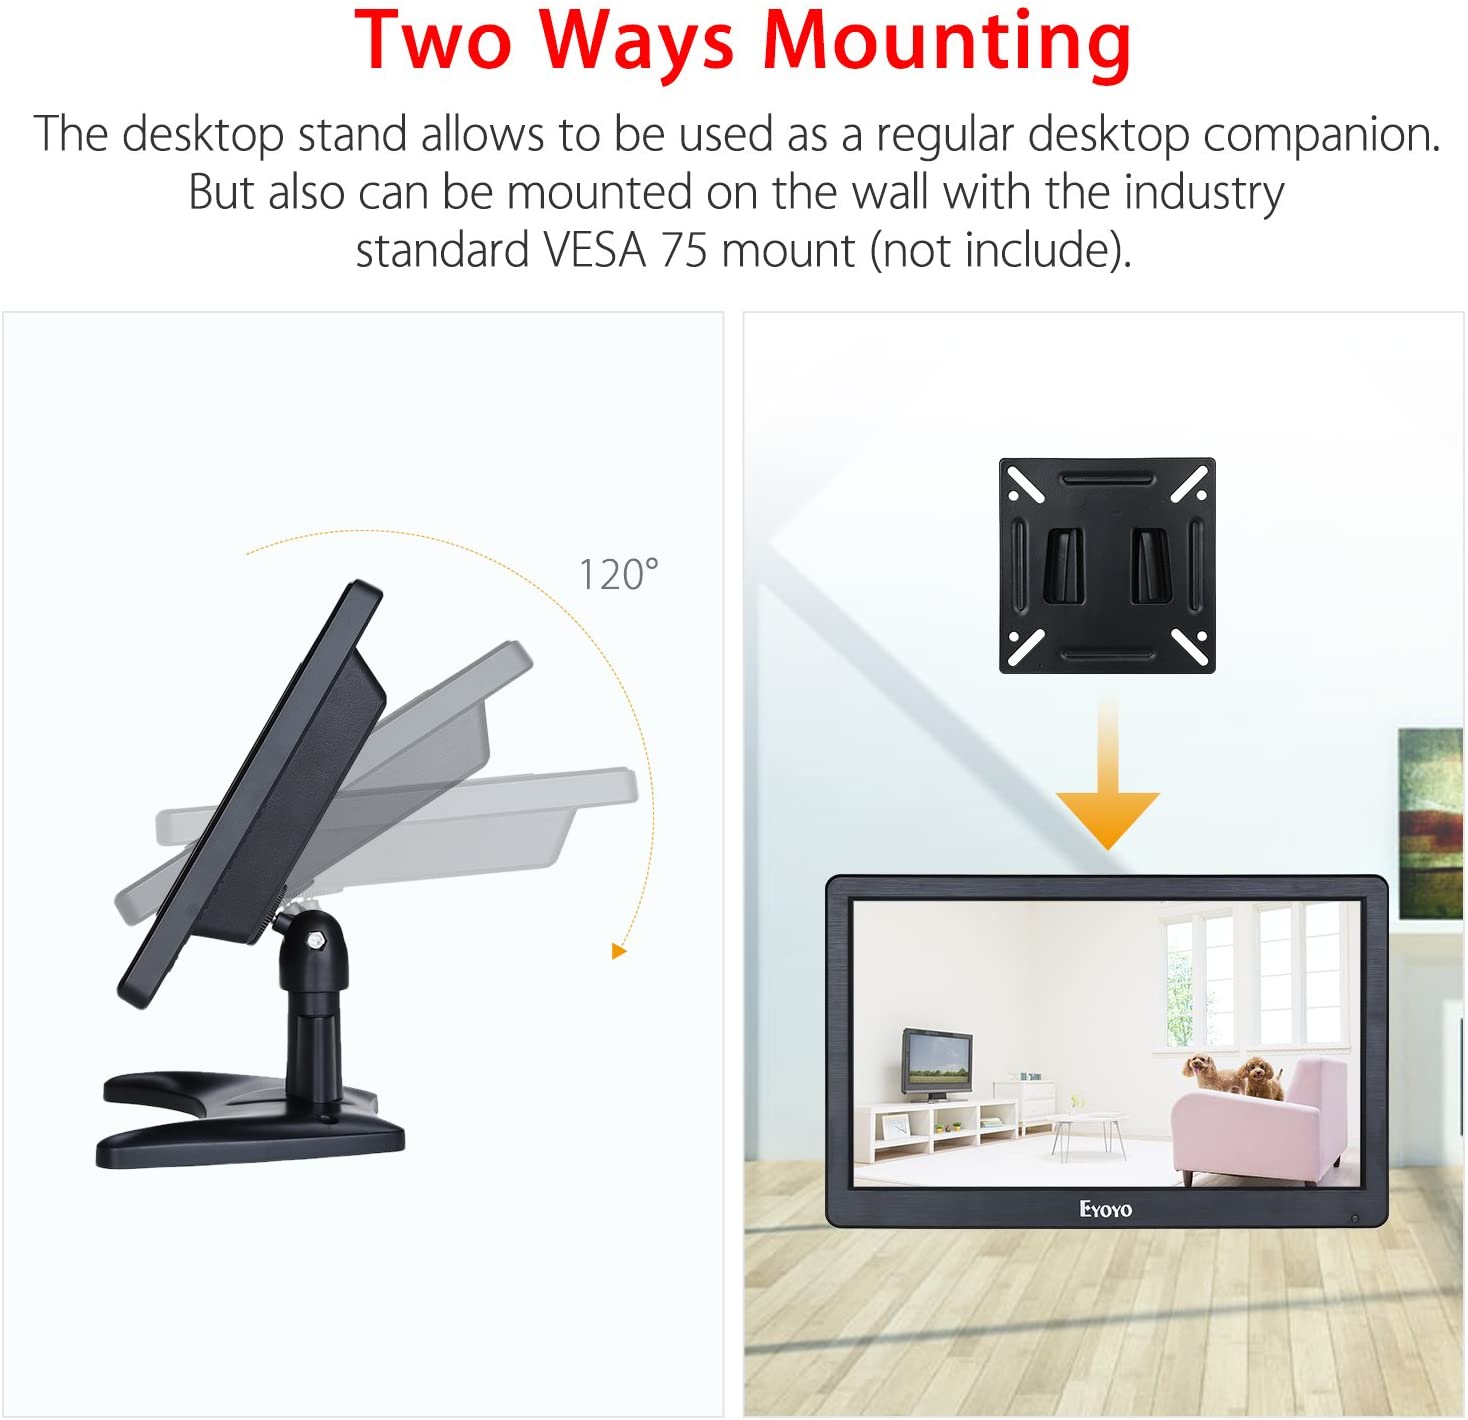 Eyoyo Monitor CCTV de 12 pulgadas 1366 x 768 TFT LCD Mini Monitor HDMI  Monitor de seguridad Industrial Monitor HDMIVGABNCAV para PC Raspberry Pi –  Yaxa Costa Rica